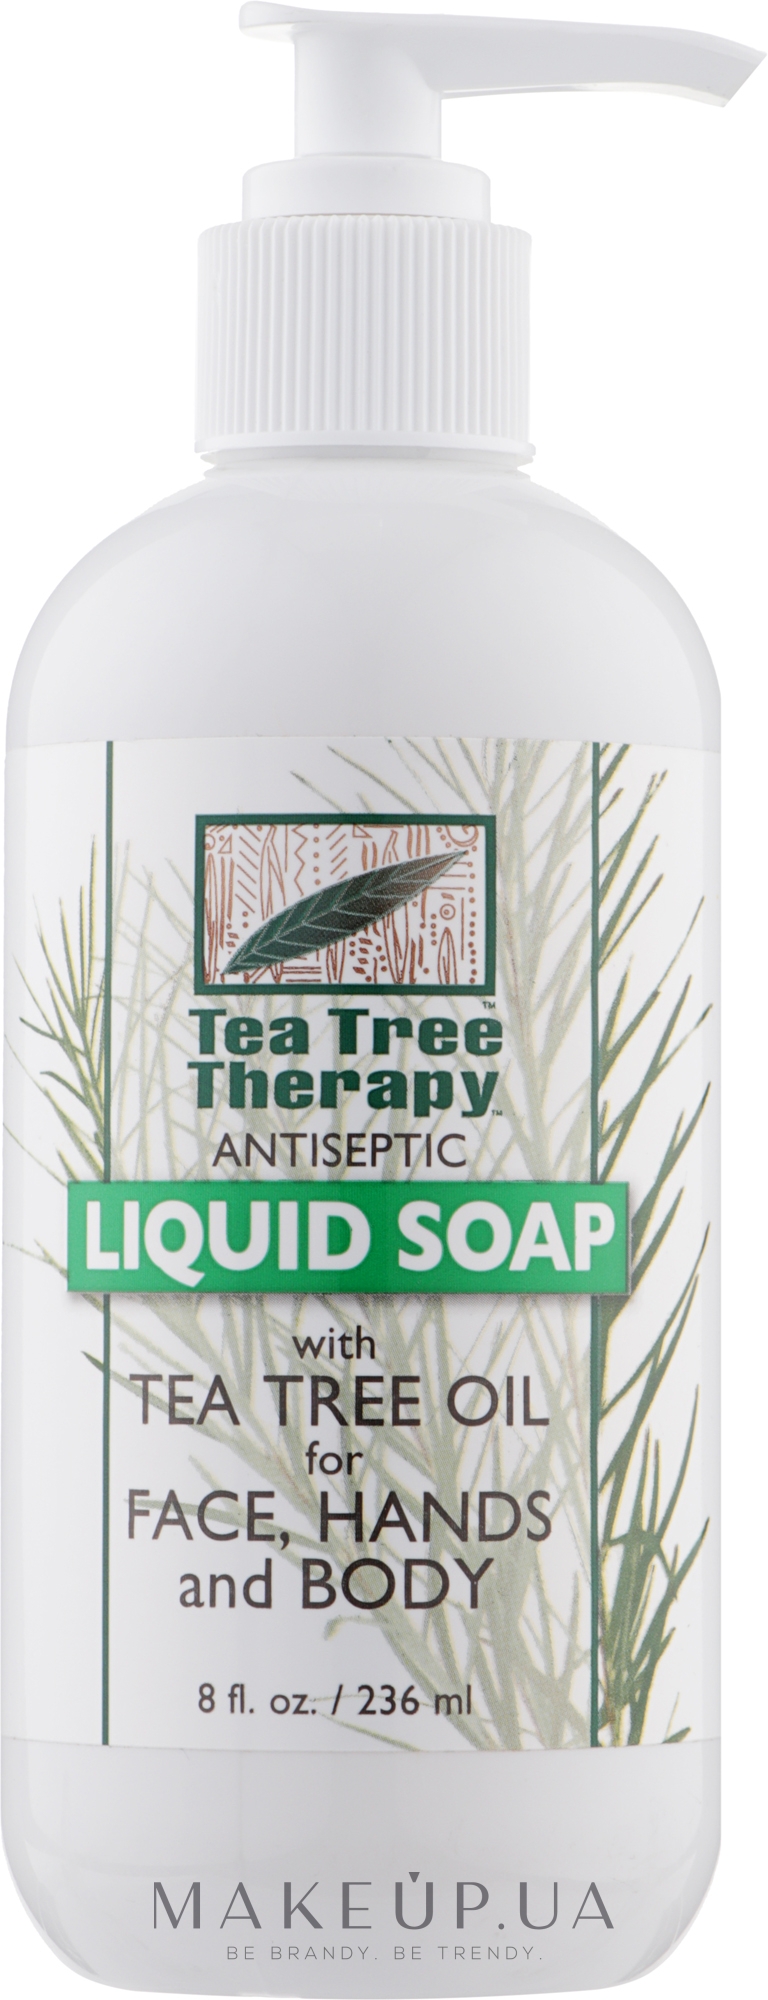 Антисептичне рідке мило для обличчя та рук з олією чайного дерева - Tea Tree Therapy Antiseptic Liquid Soap With Tea Tree Oil — фото 236ml